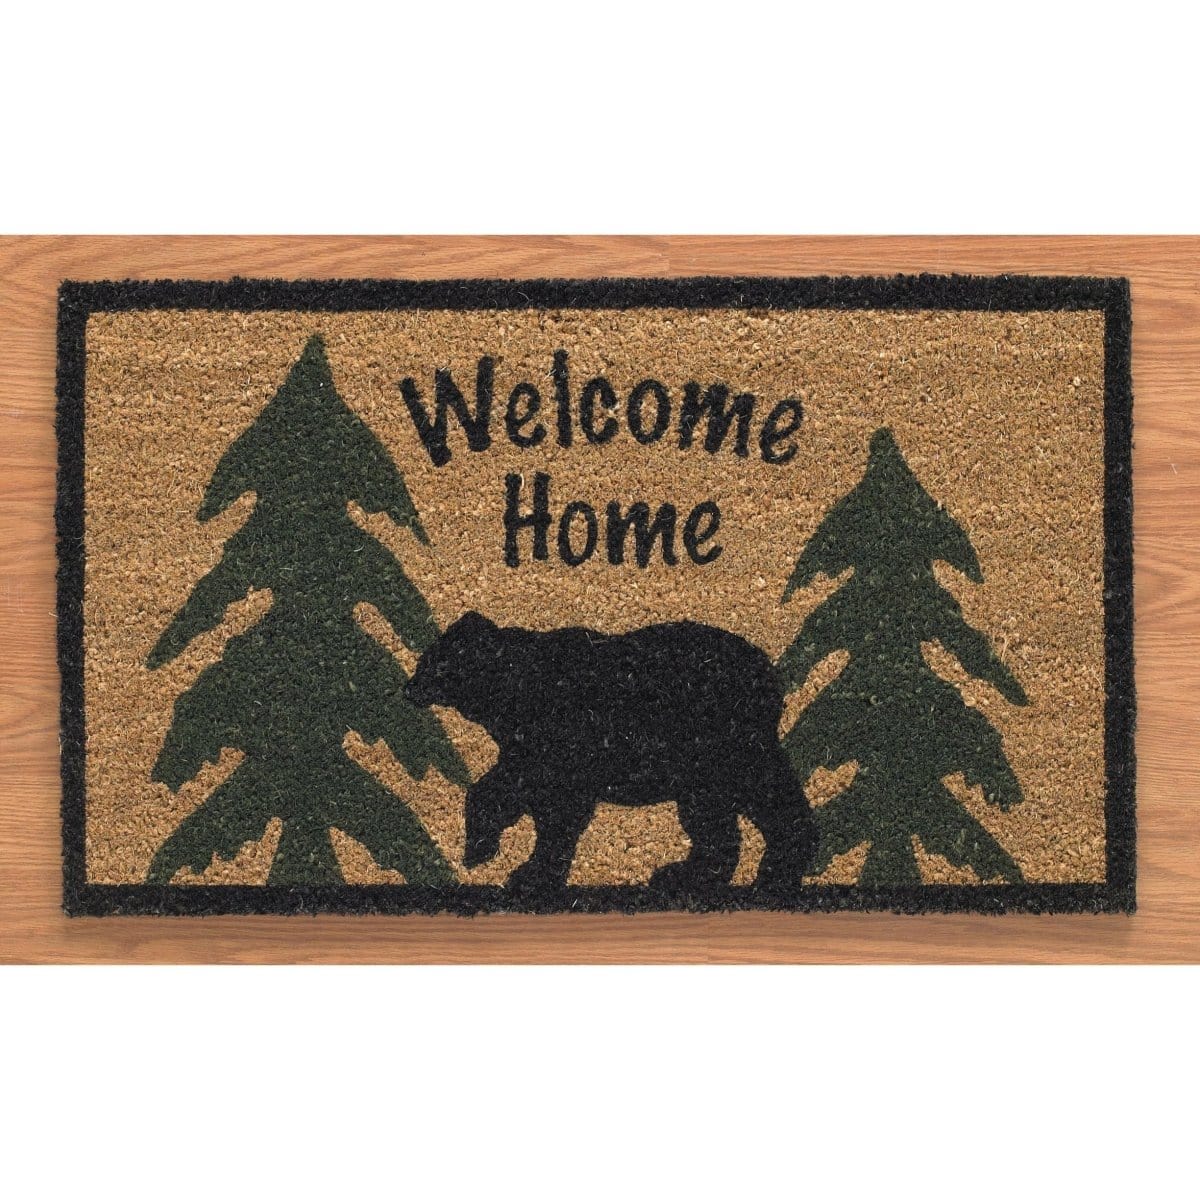 Coir Welcome Home Black Bear Doormat-Park Designs-The Village Merchant